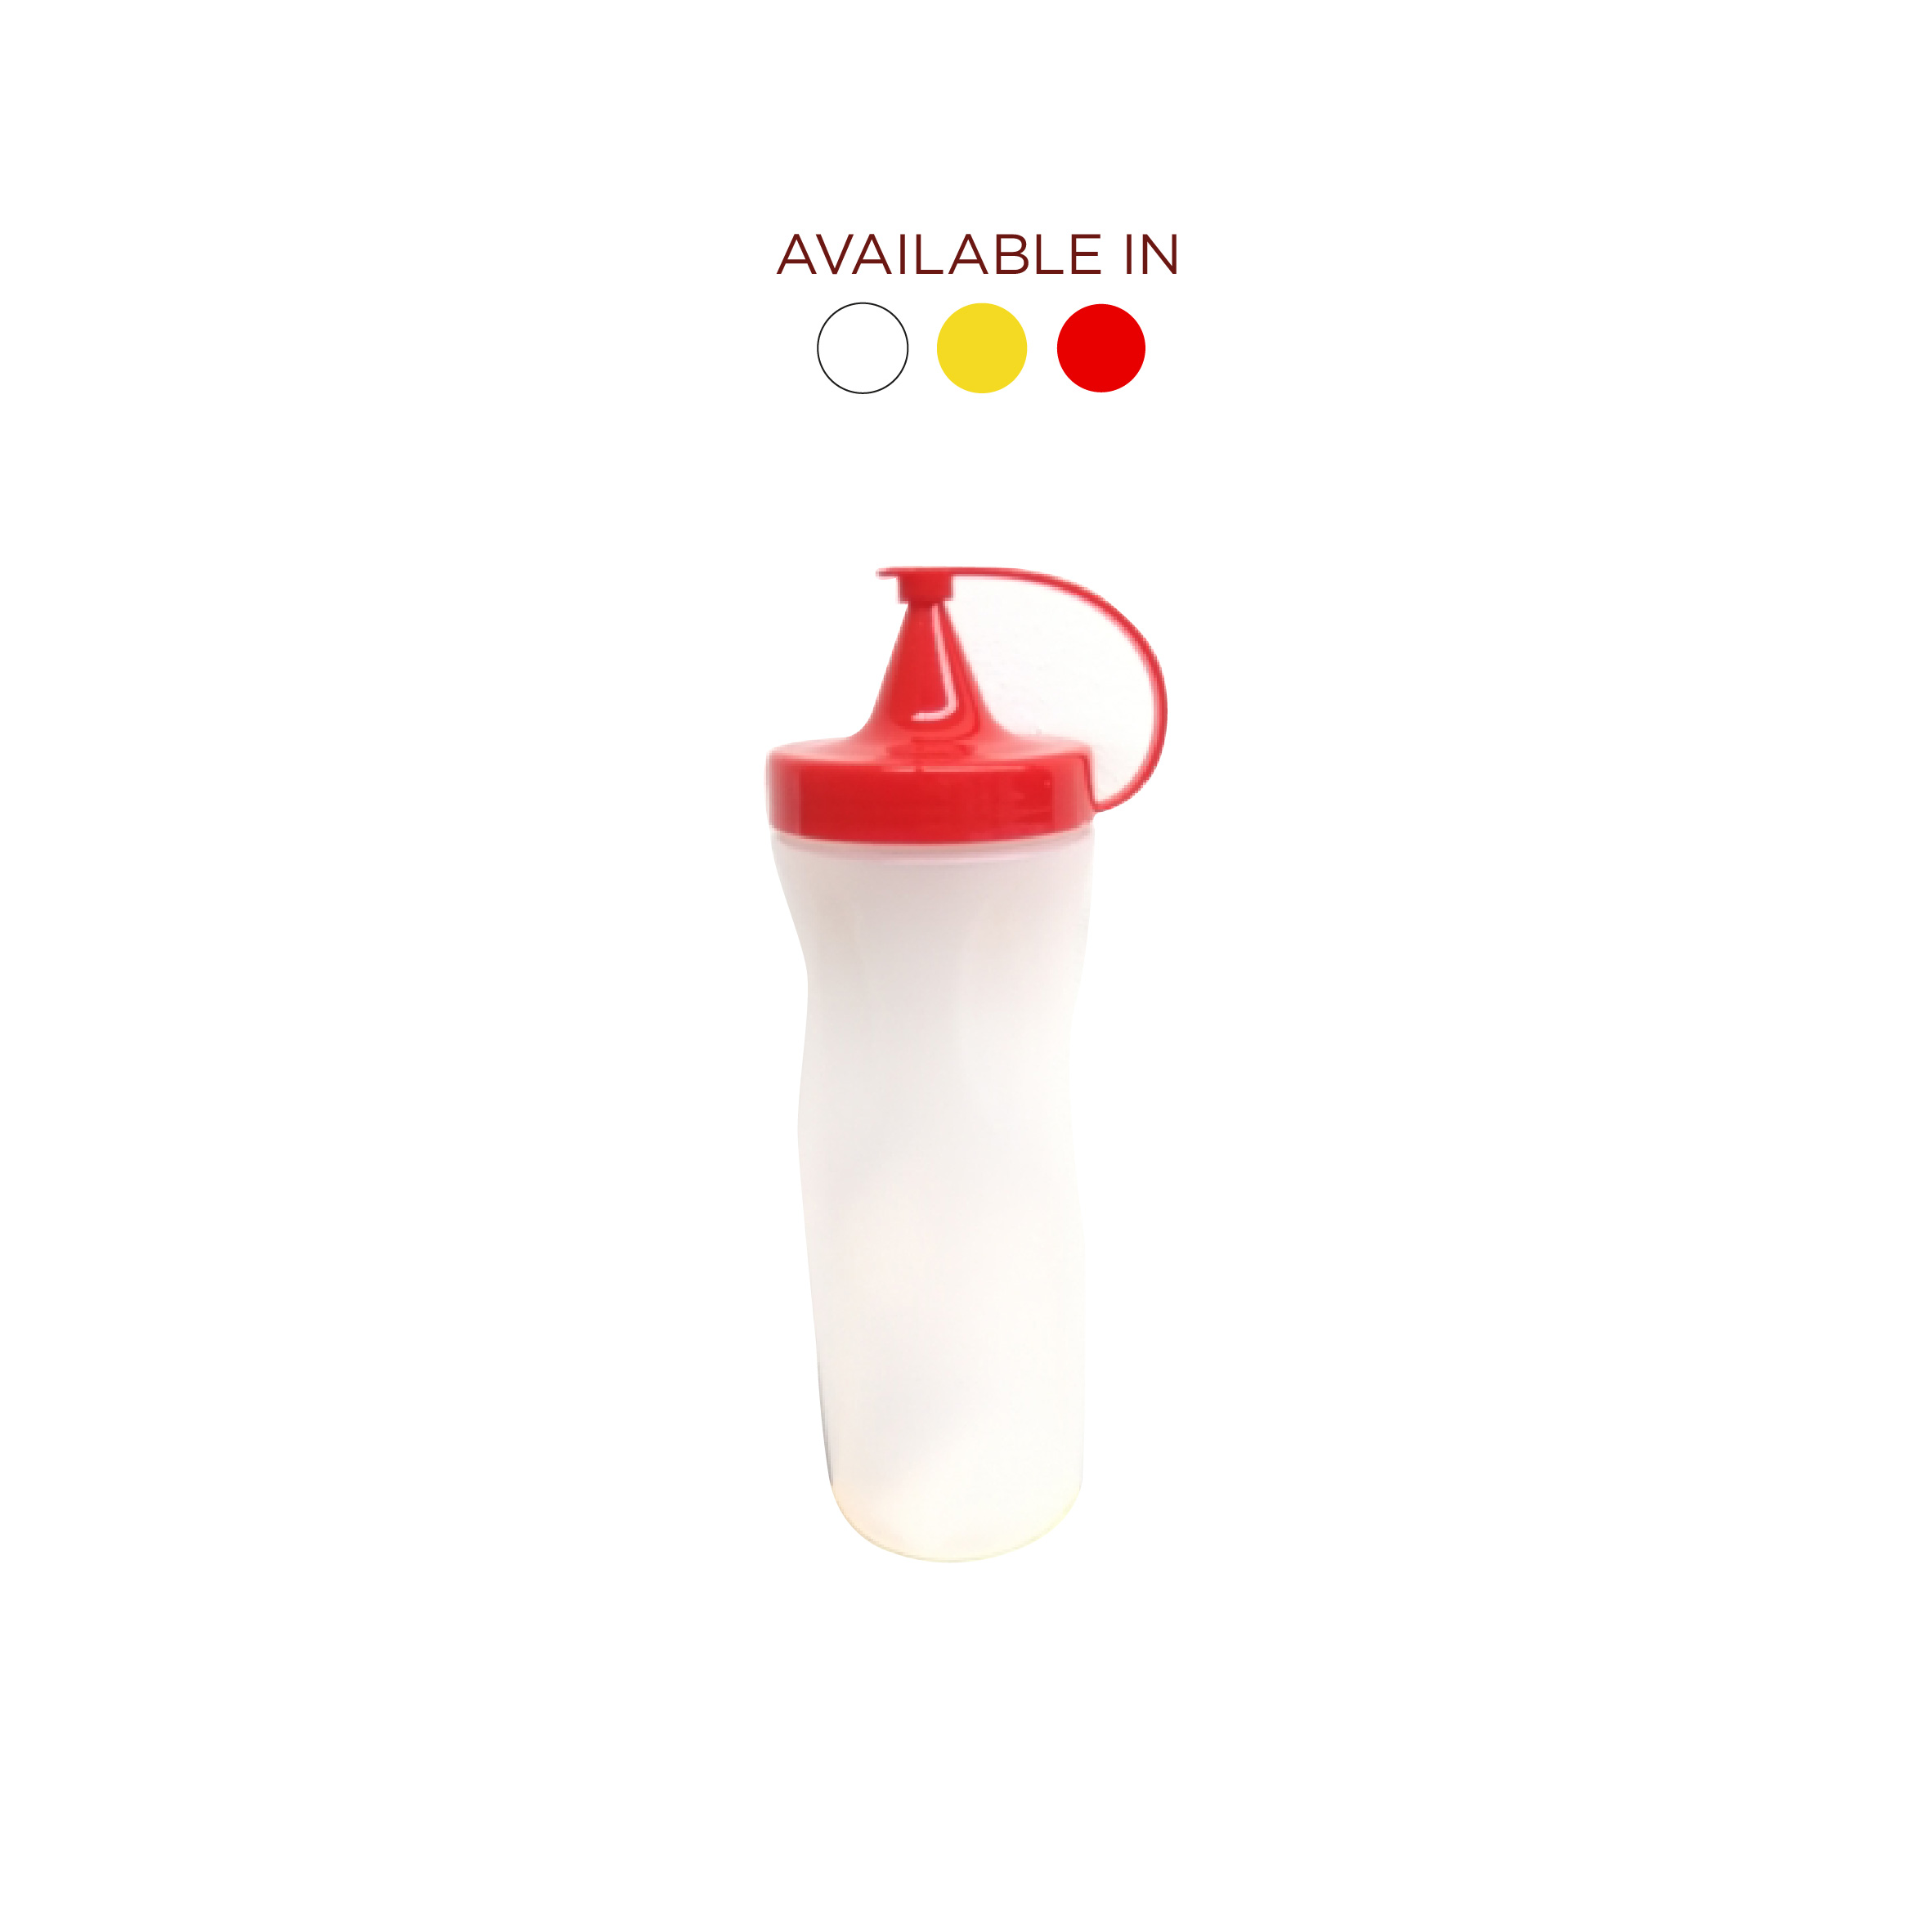 Sunplast Sauce Bottle 400ML (Available in White / Yellow / Red), SC-303